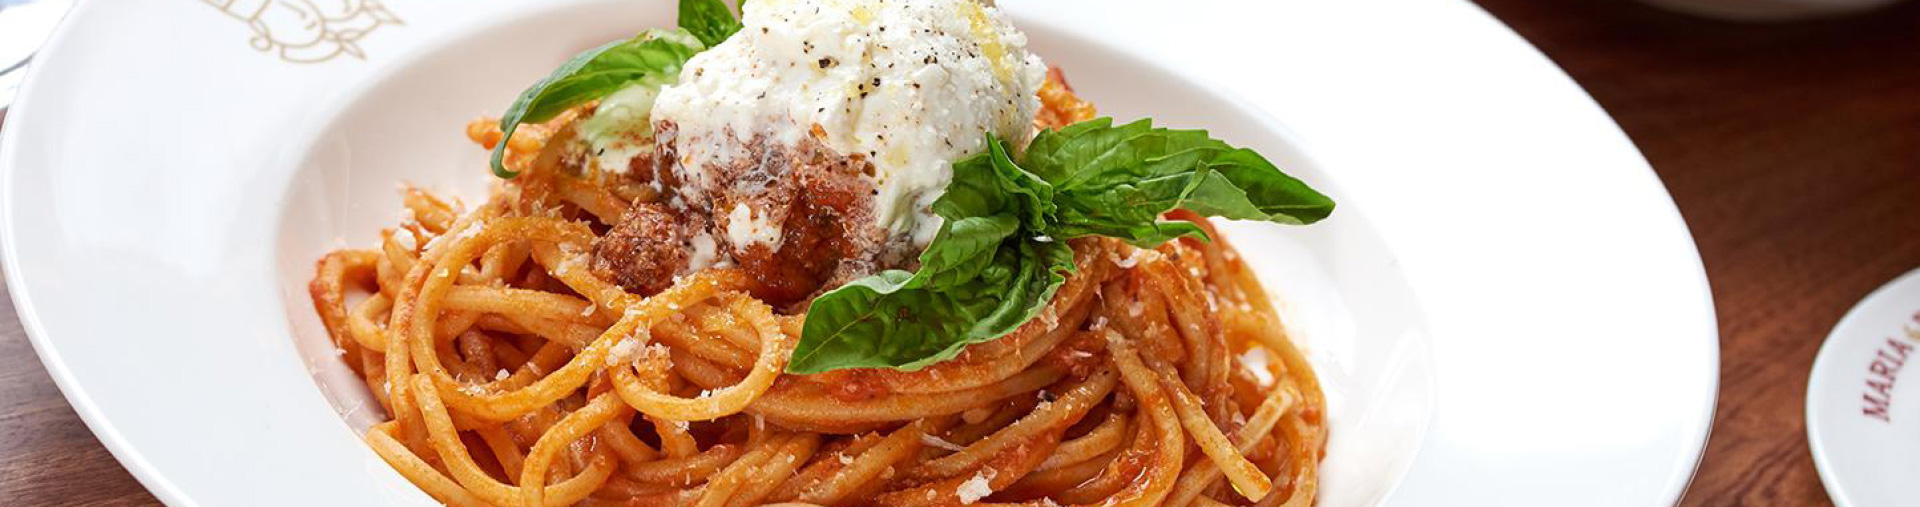 House-made Spaghetti & Meatballs | Disney Springs Dining